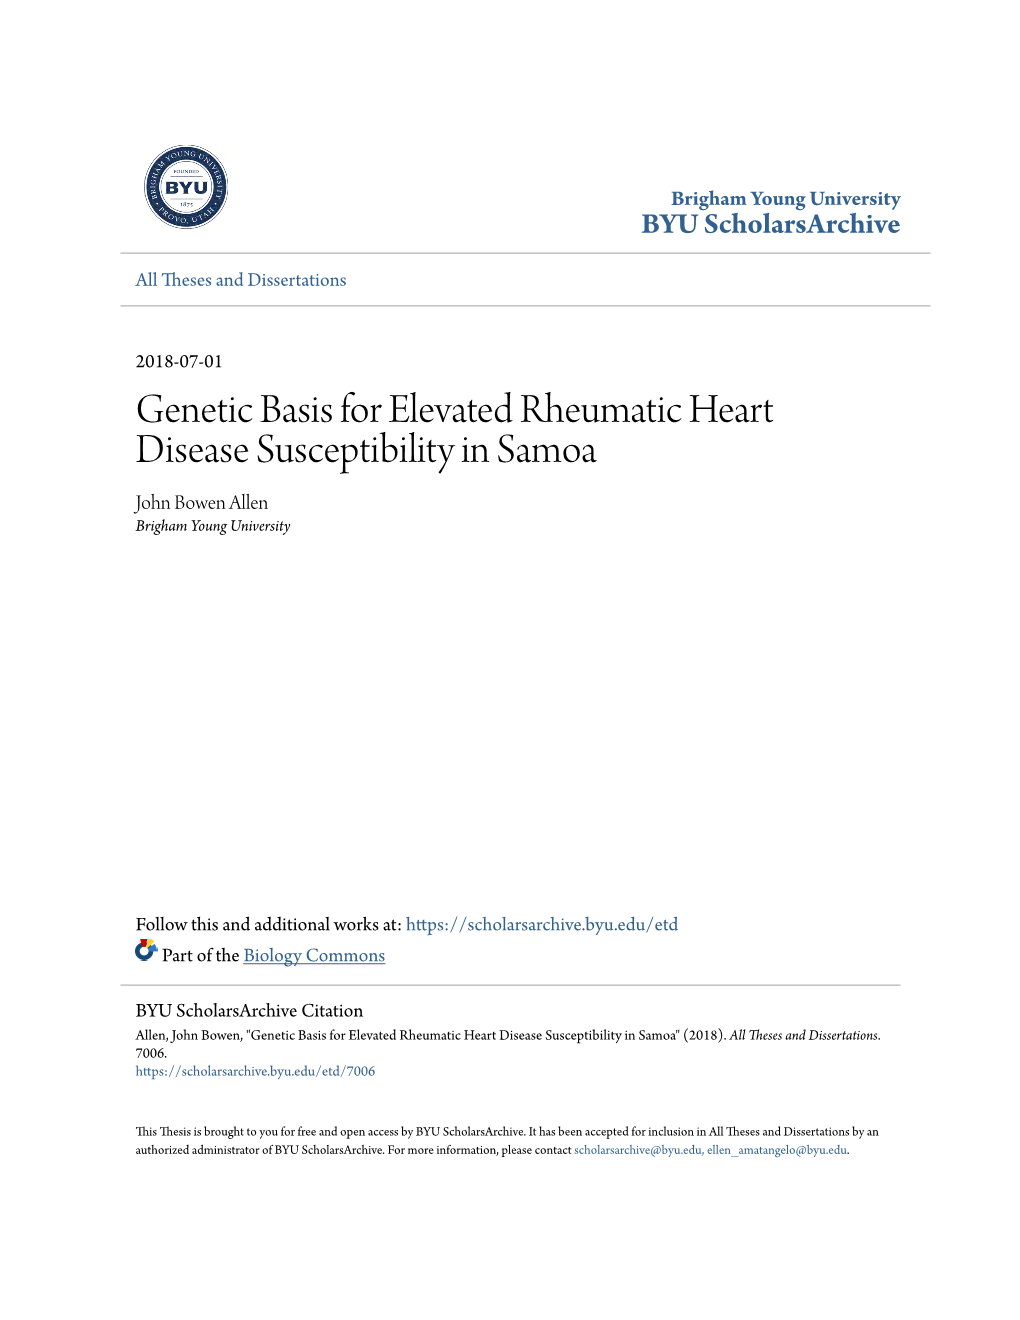 Genetic Basis for Elevated Rheumatic Heart Disease Susceptibility in Samoa John Bowen Allen Brigham Young University